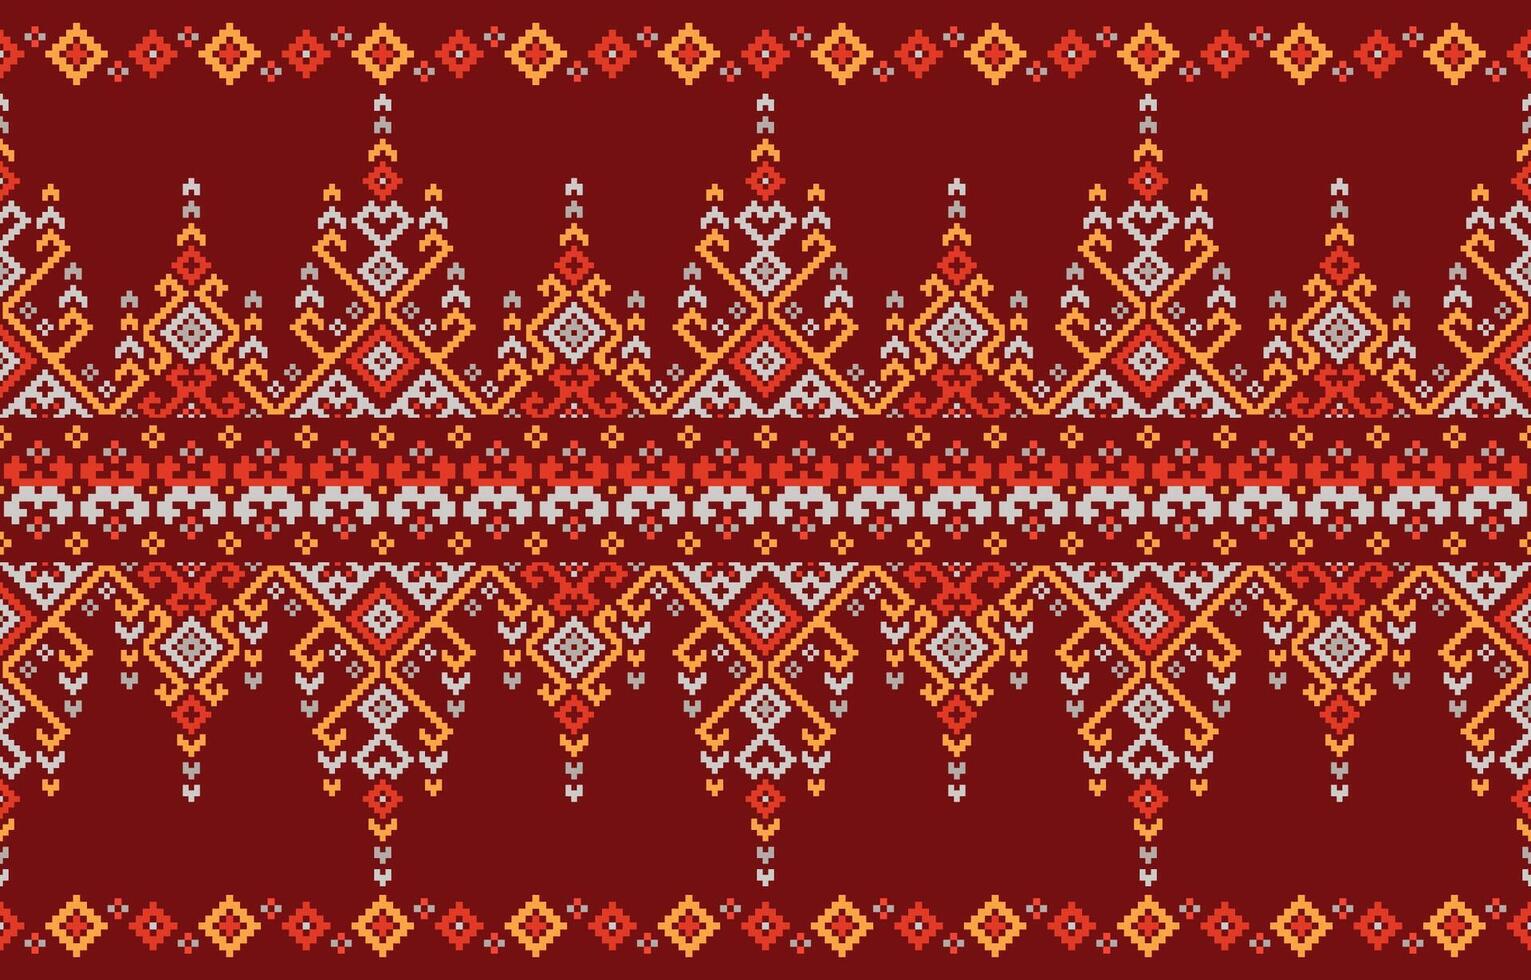 Geometric pattern. Cross stitch pattern on red background. Design for cross stitch,ethnic,fabric,pattern,embroidery,motif, cross,stitch,folk,retro,pixel,handcraft,abstract,batik,zigzag. vector